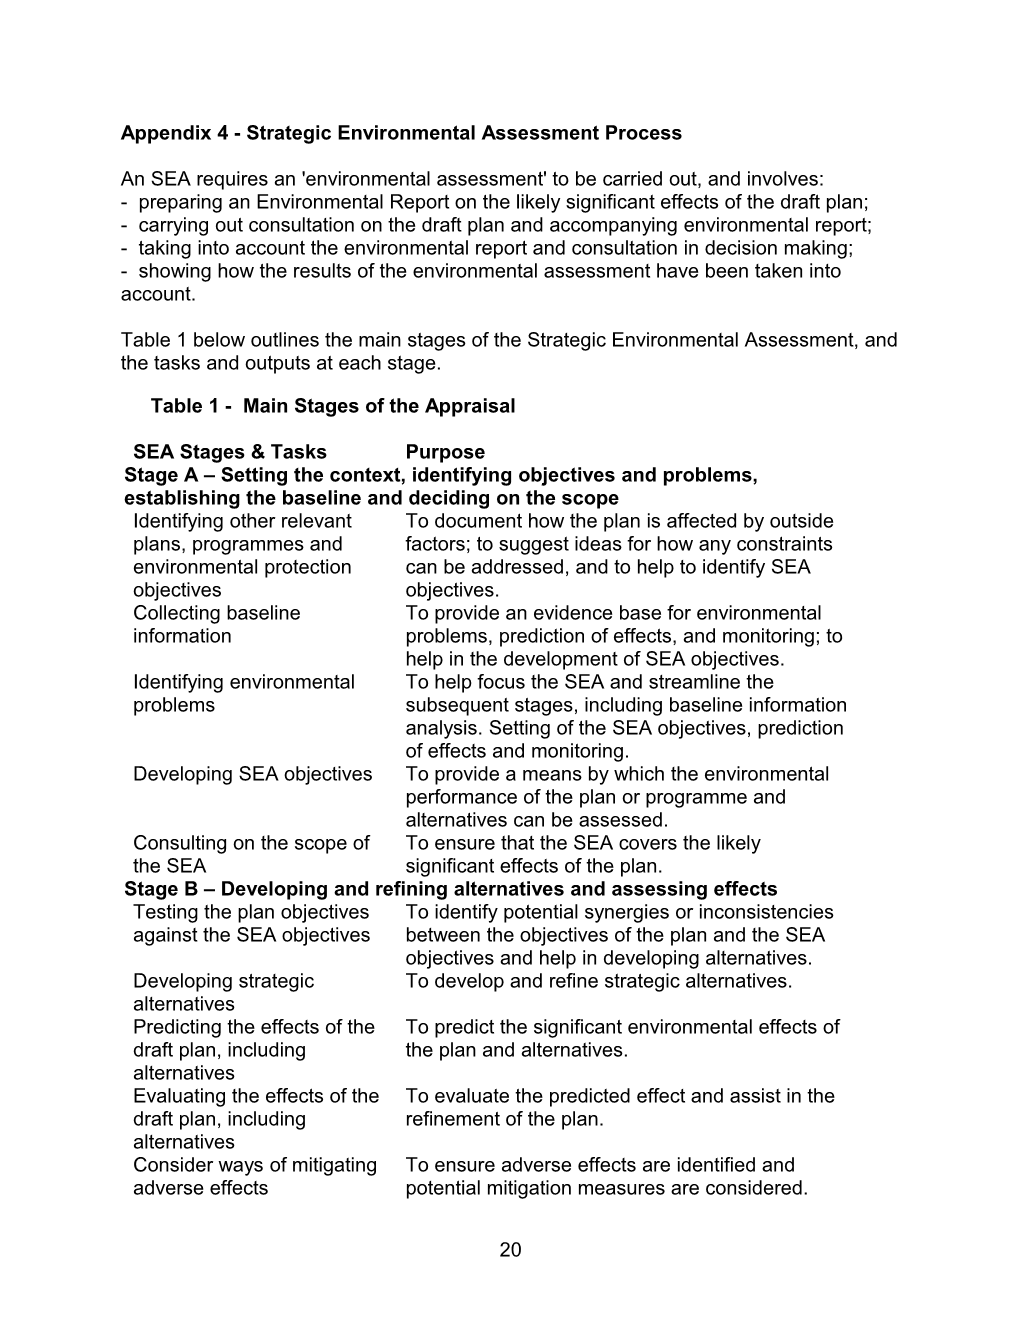 Appendix 5 - Strategic Environmental Assessment Process